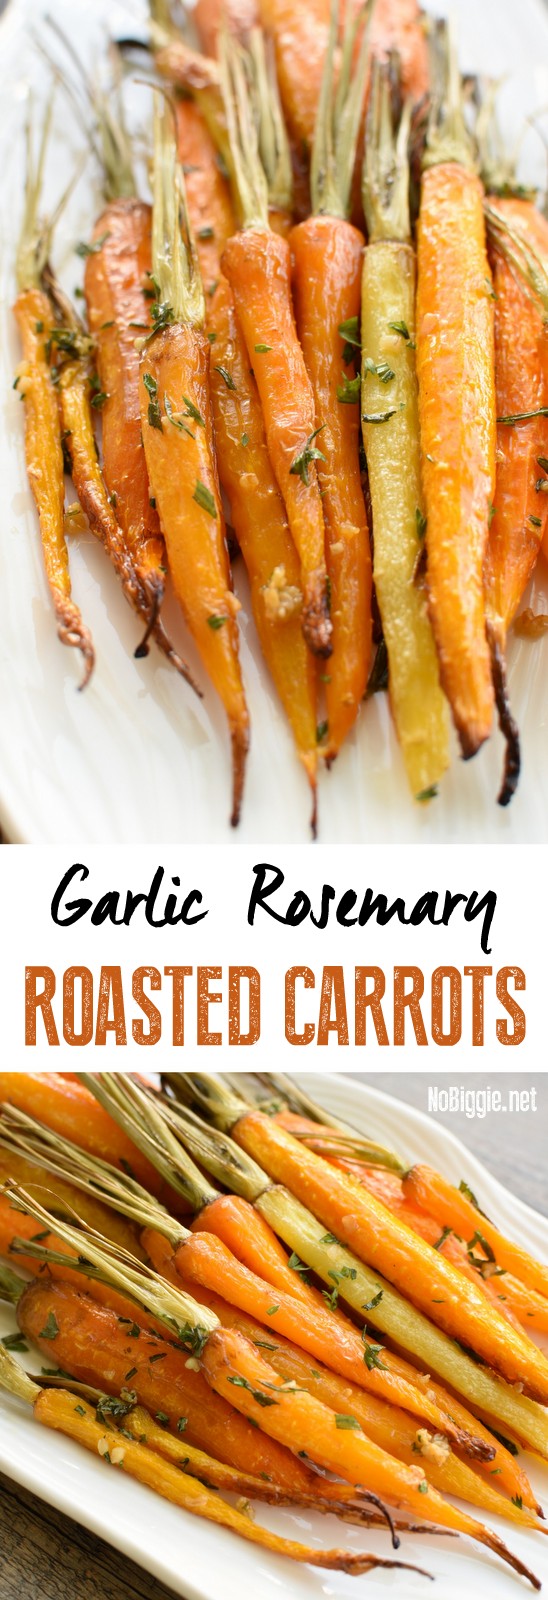 Garlic Rosemary Roasted Carrots | NoBiggie.net